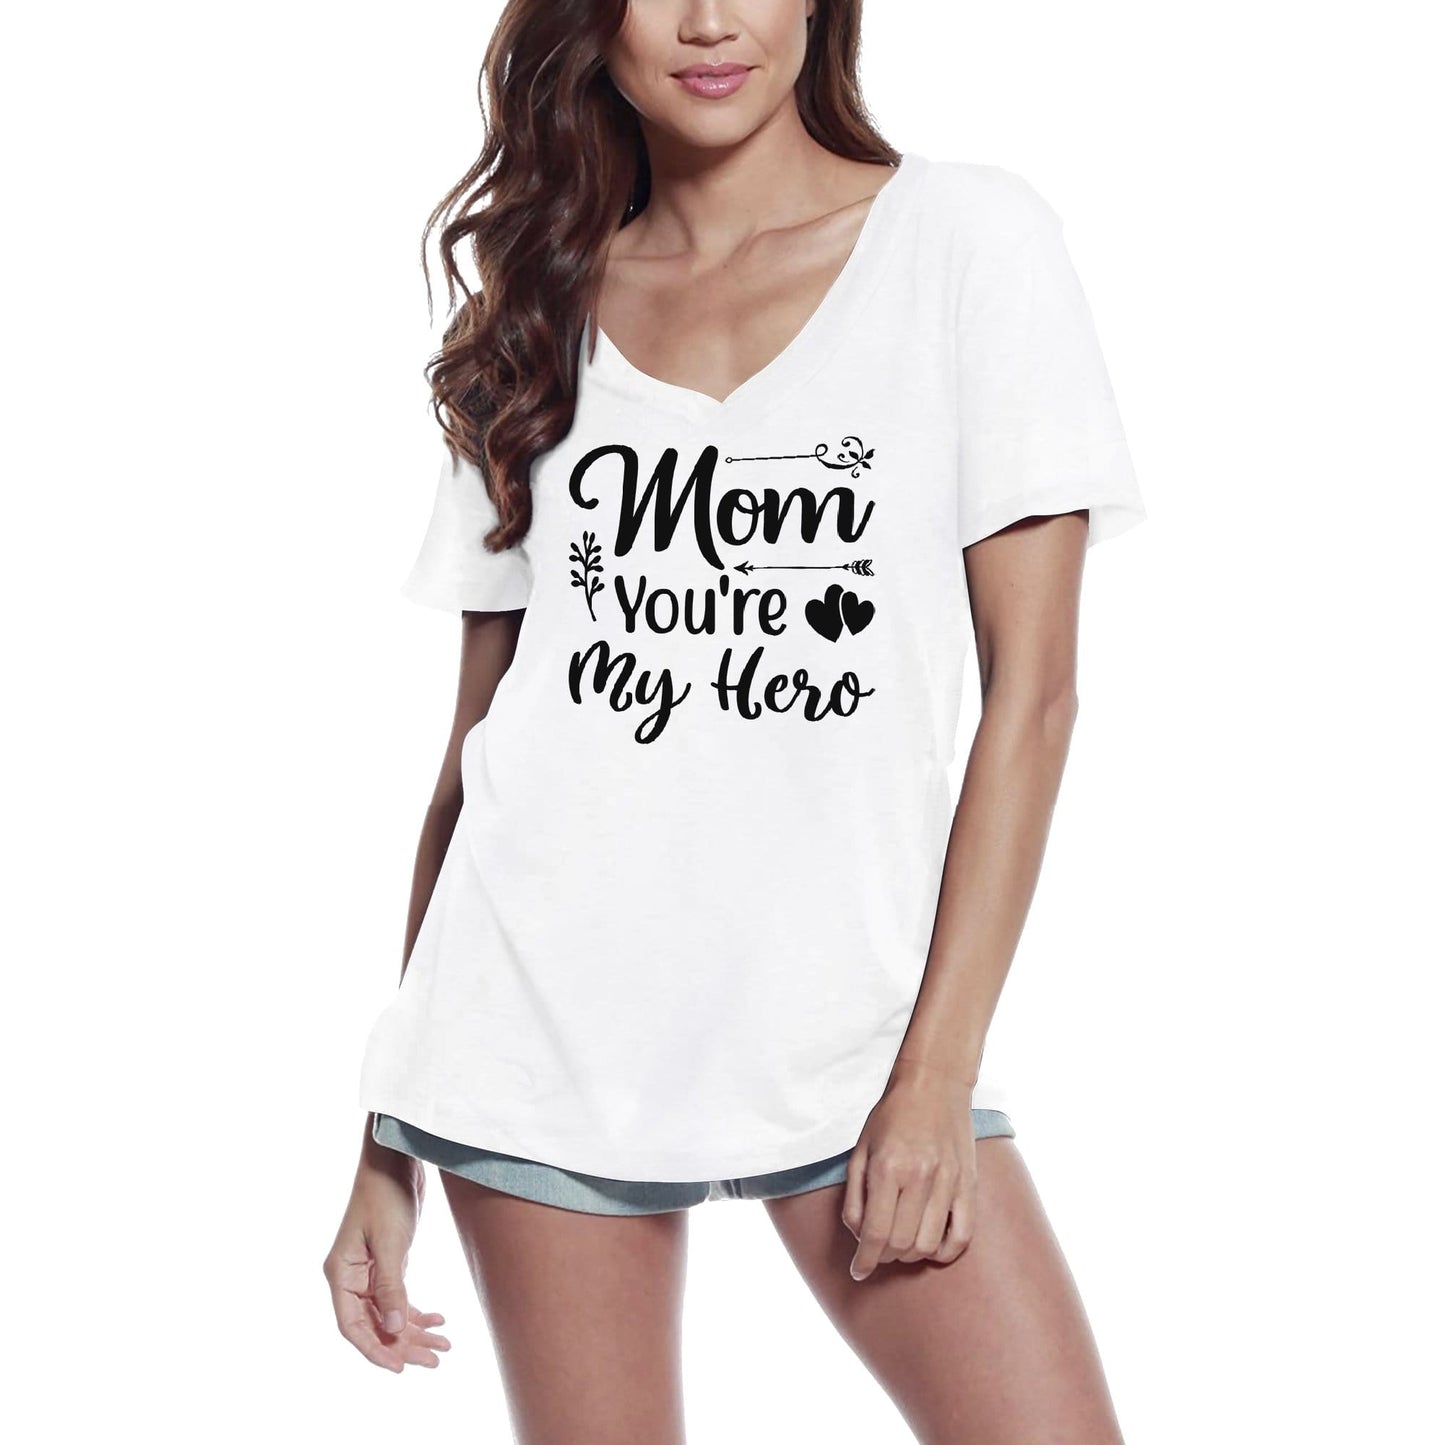 ULTRABASIC Women's T-Shirt Mom You're My Hero - Short Sleeve Tee Shirt Tops